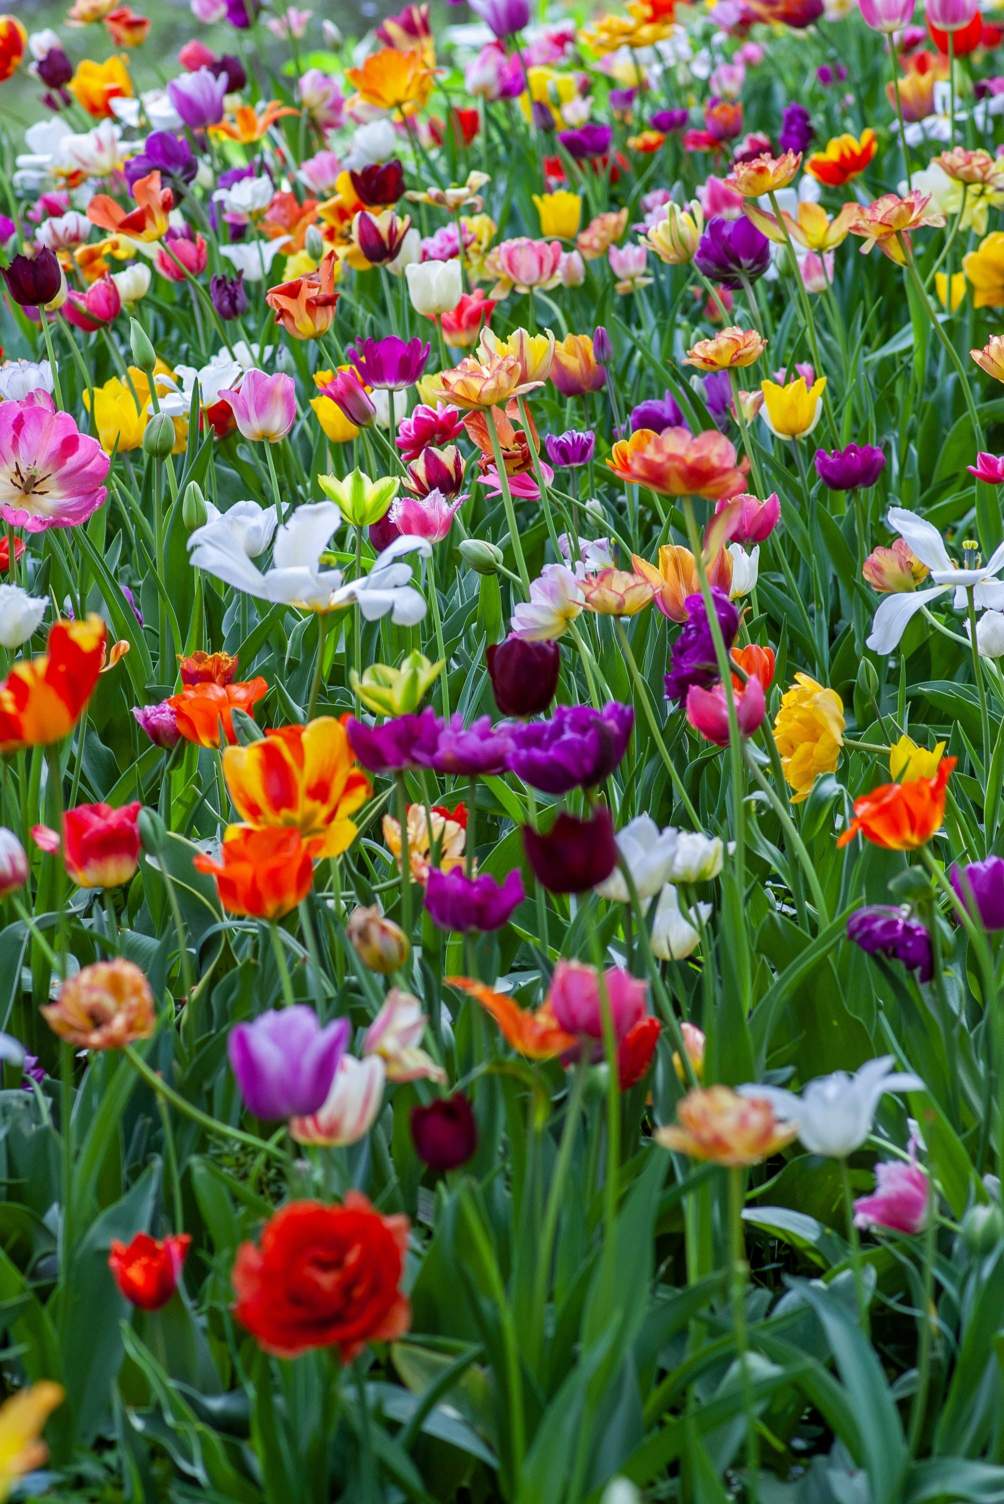 Colorful tulips in spring garden Photo by Yoksel Zok 